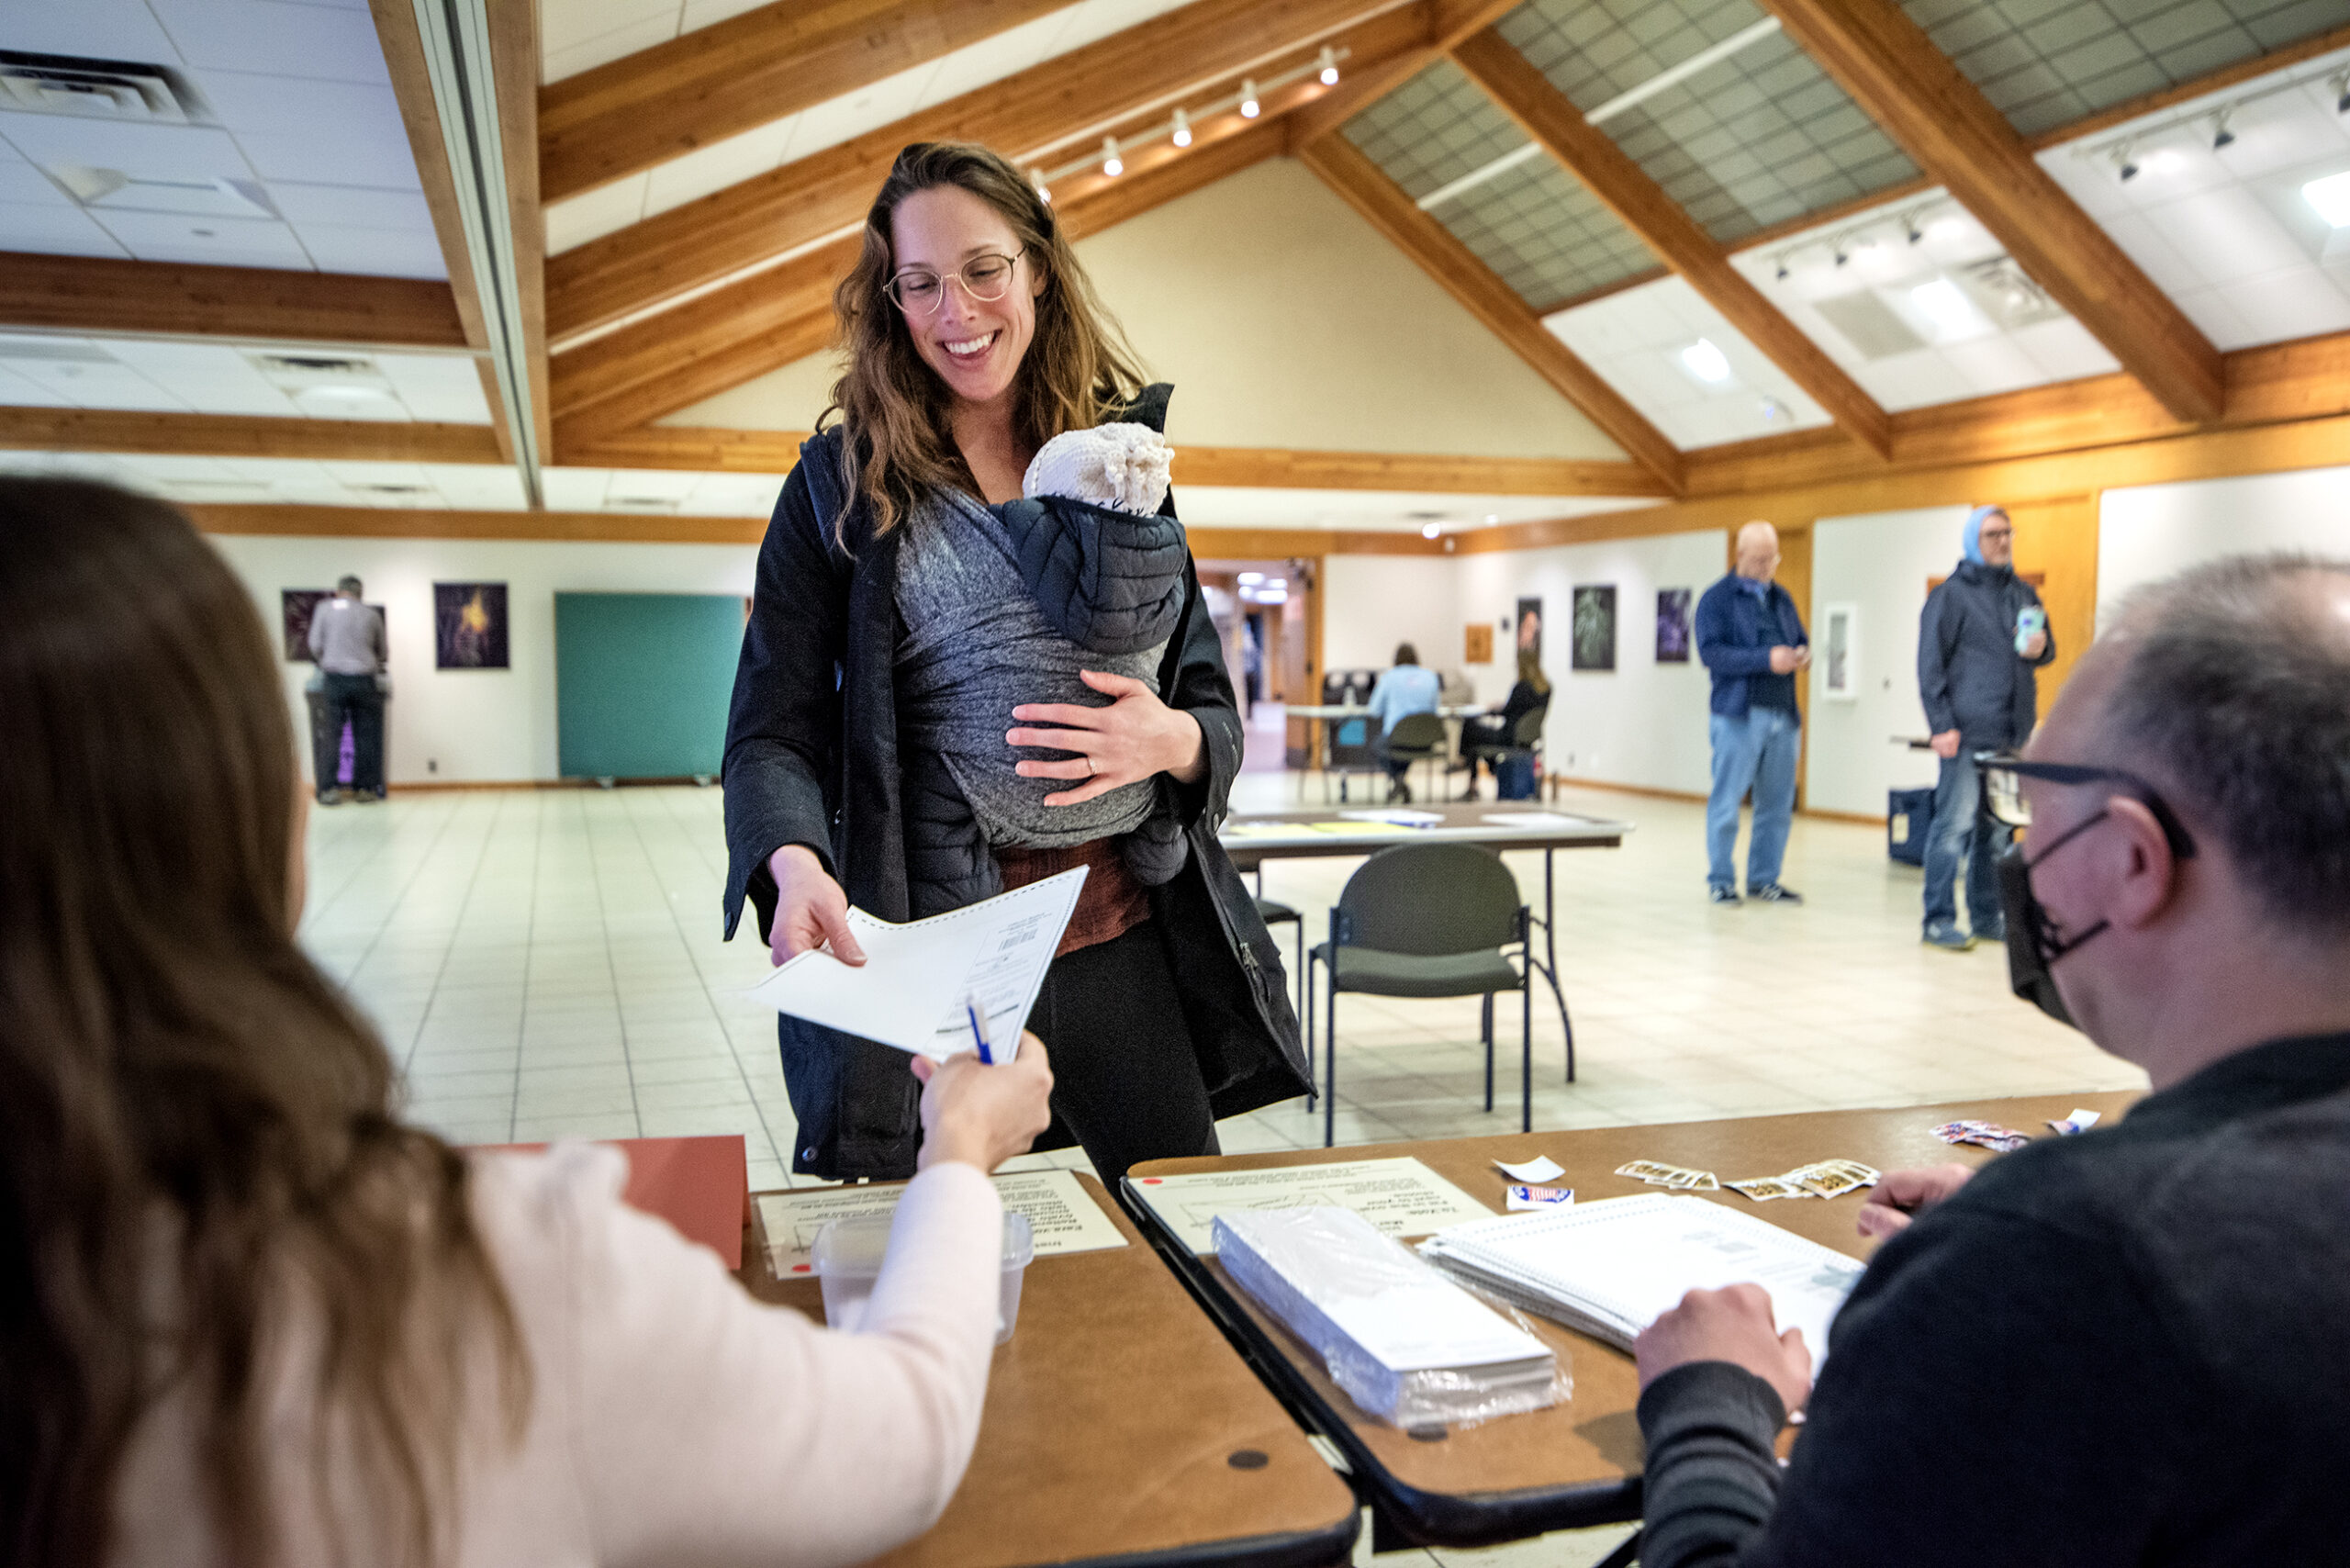 A woman holding a baby smiles as she reaches for a ballot.